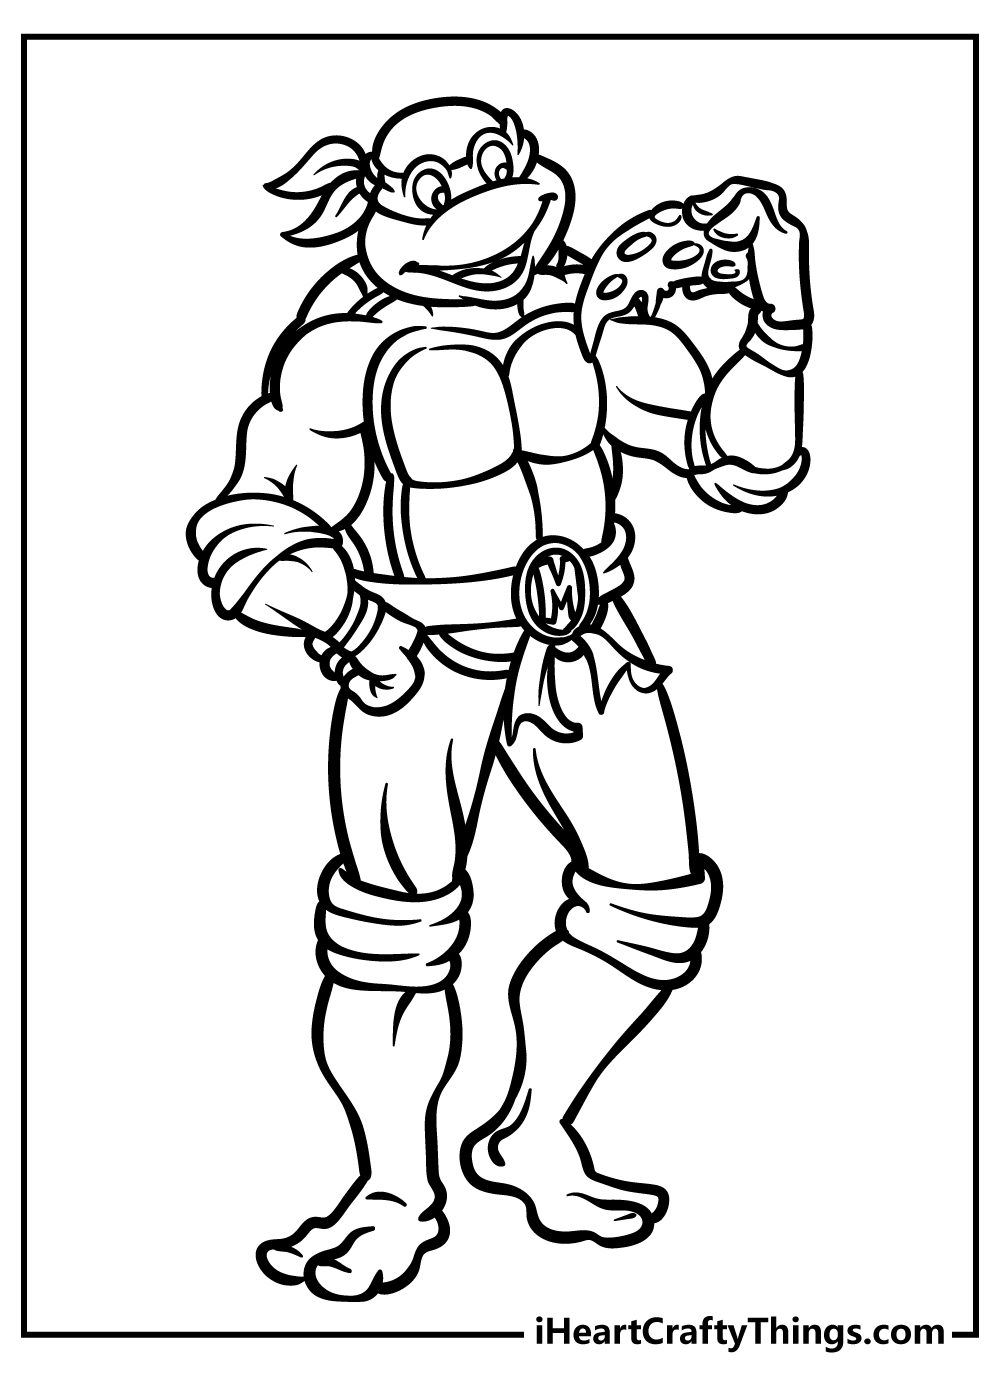 Ninja Turtles Coloring Pages free pdf download